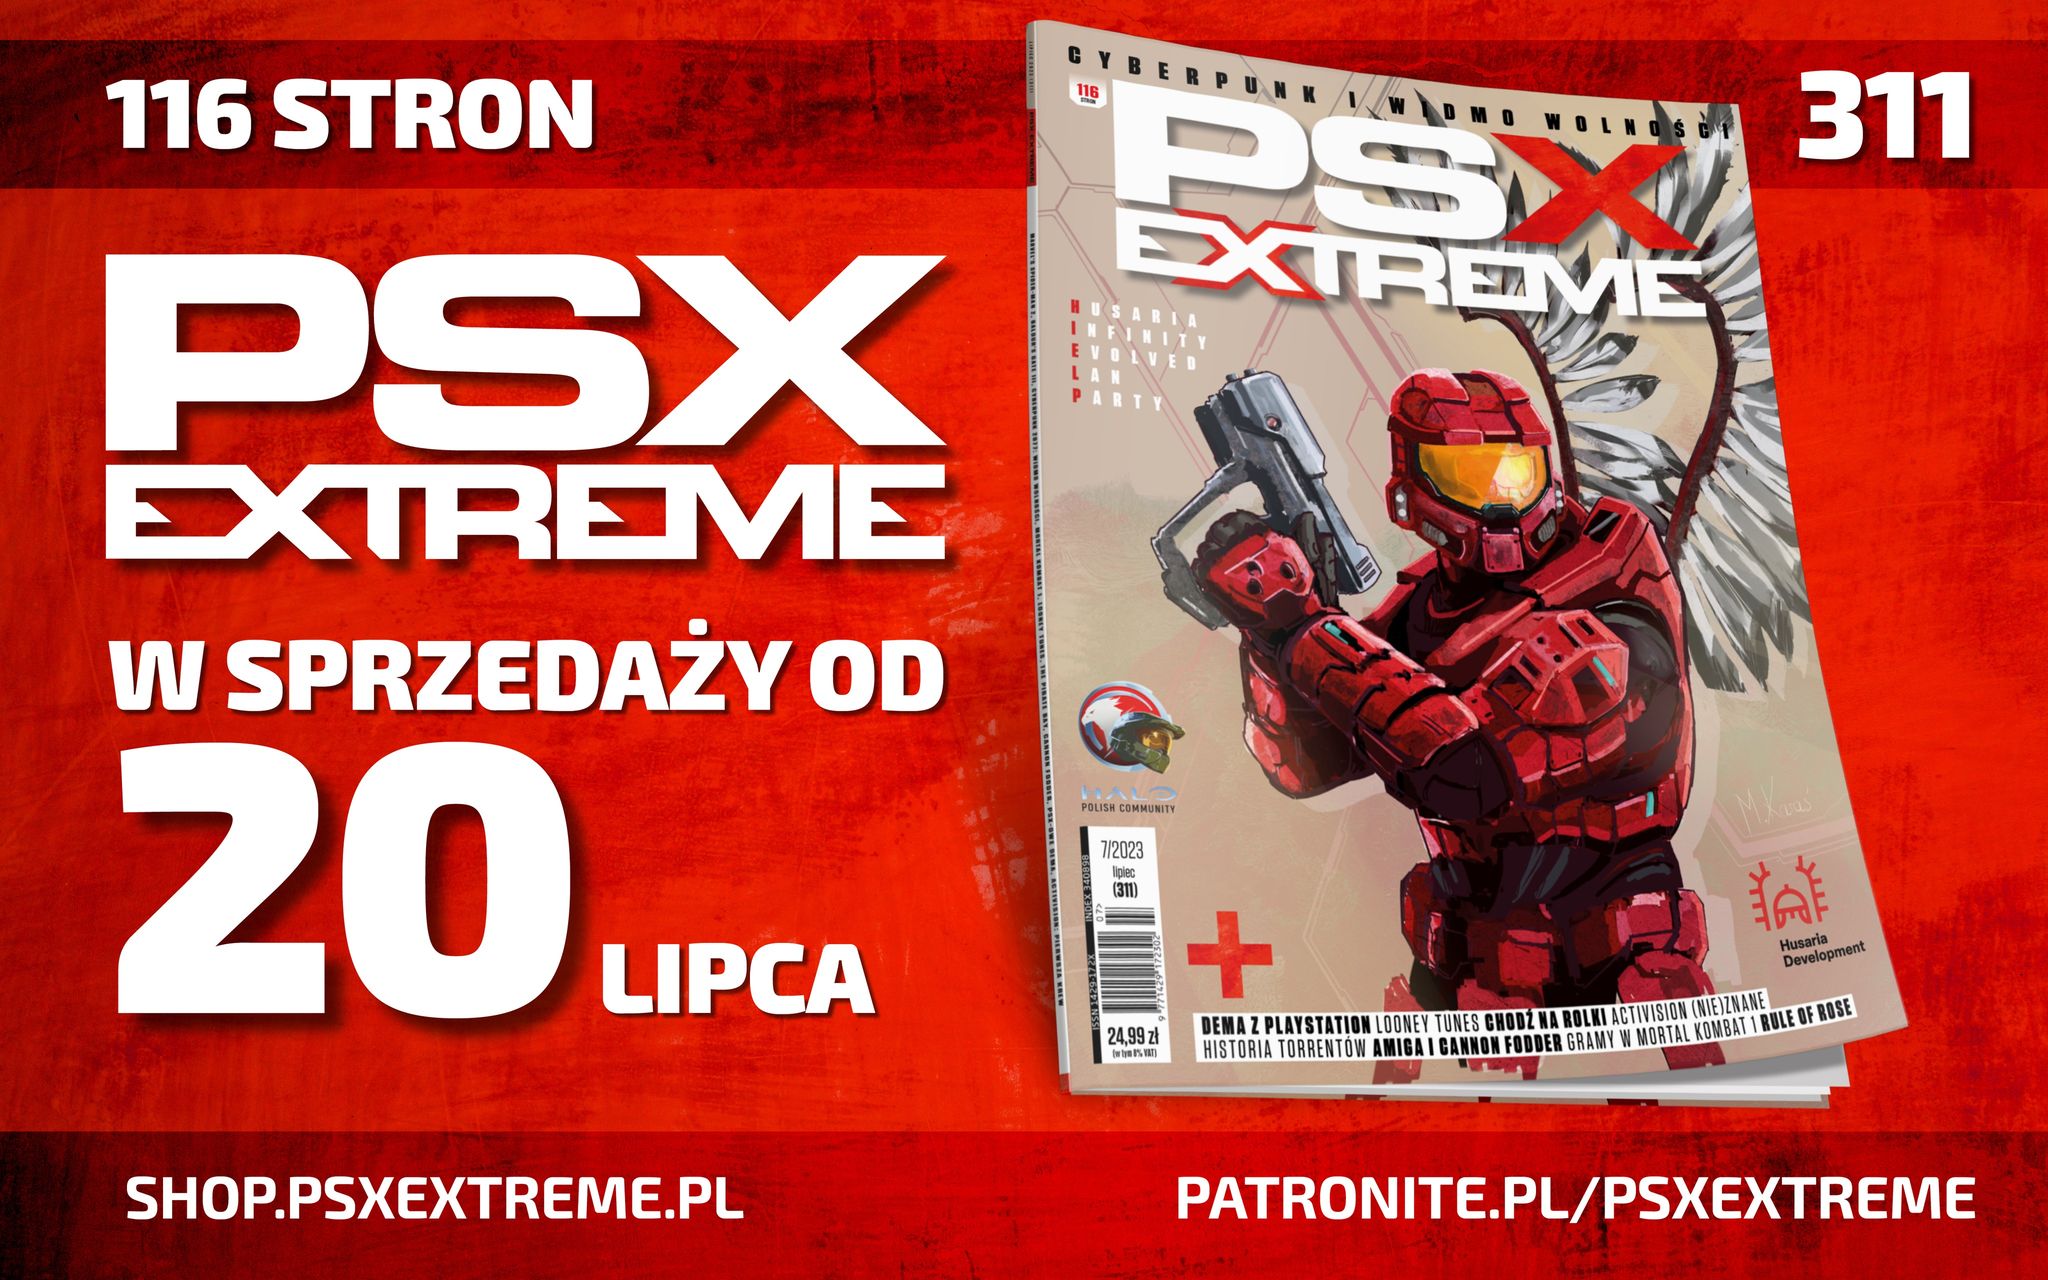 PSX Extreme 311